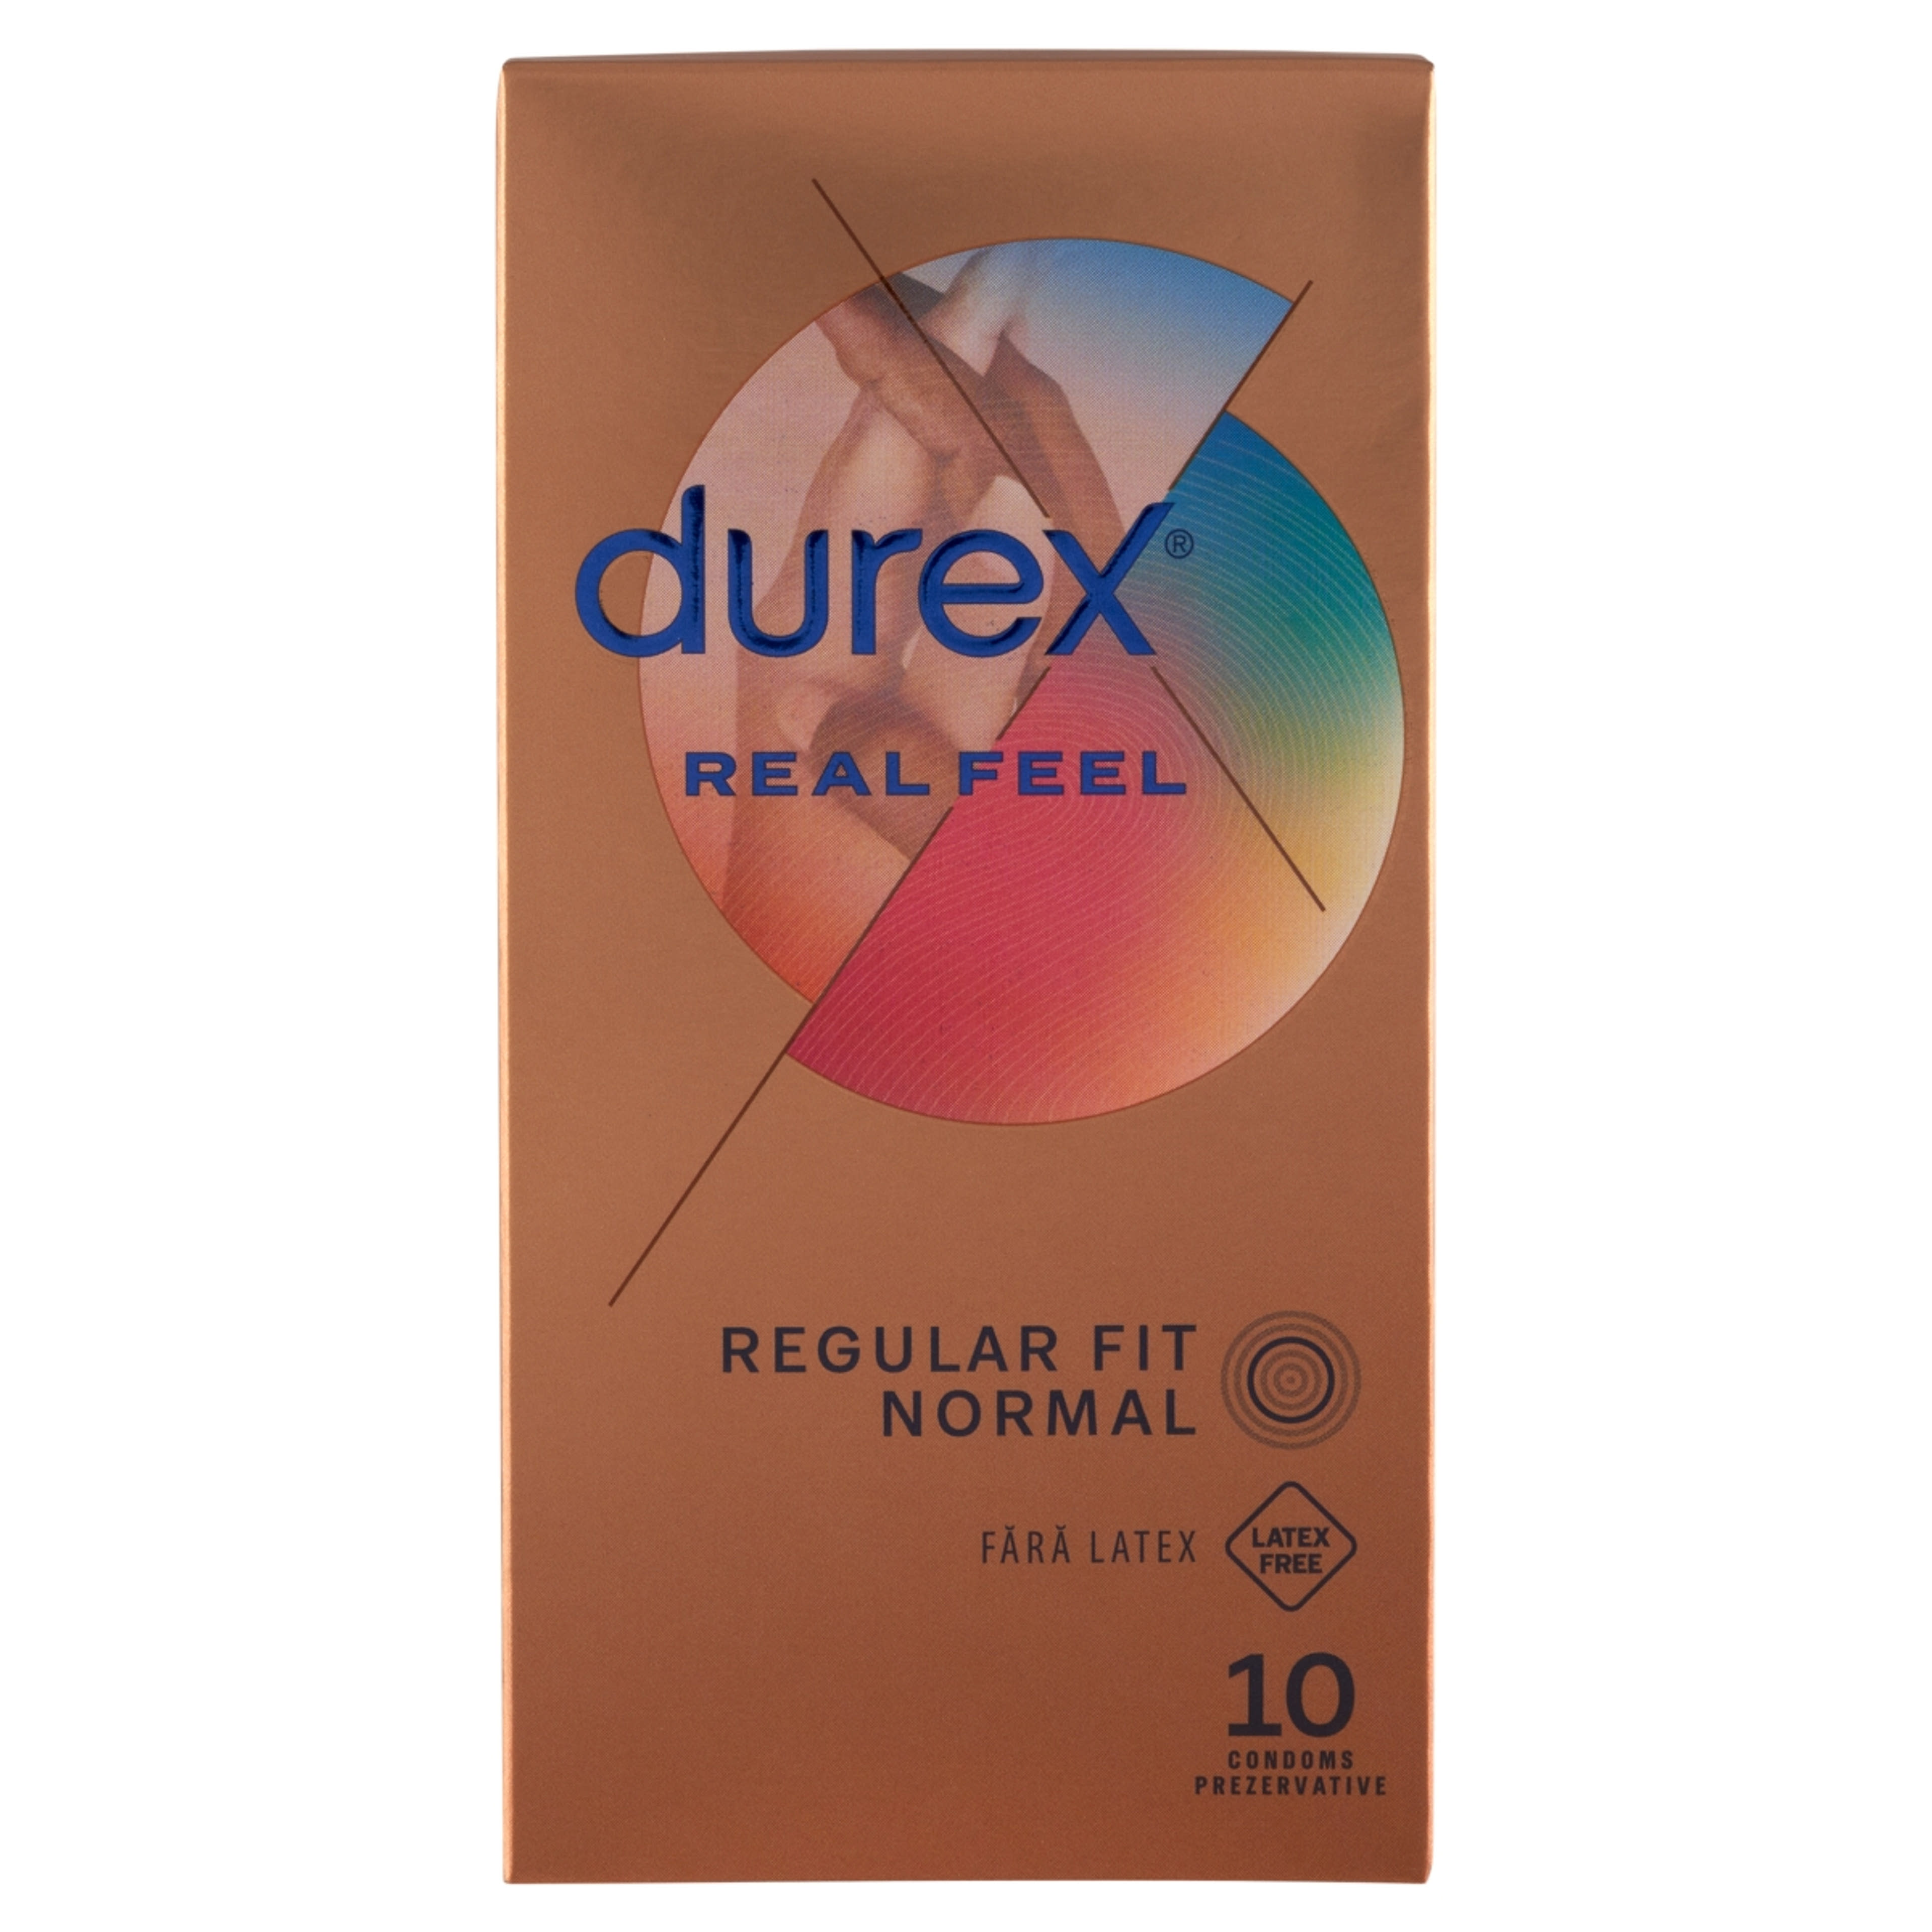 Durex Real feel óvszer - 10 db